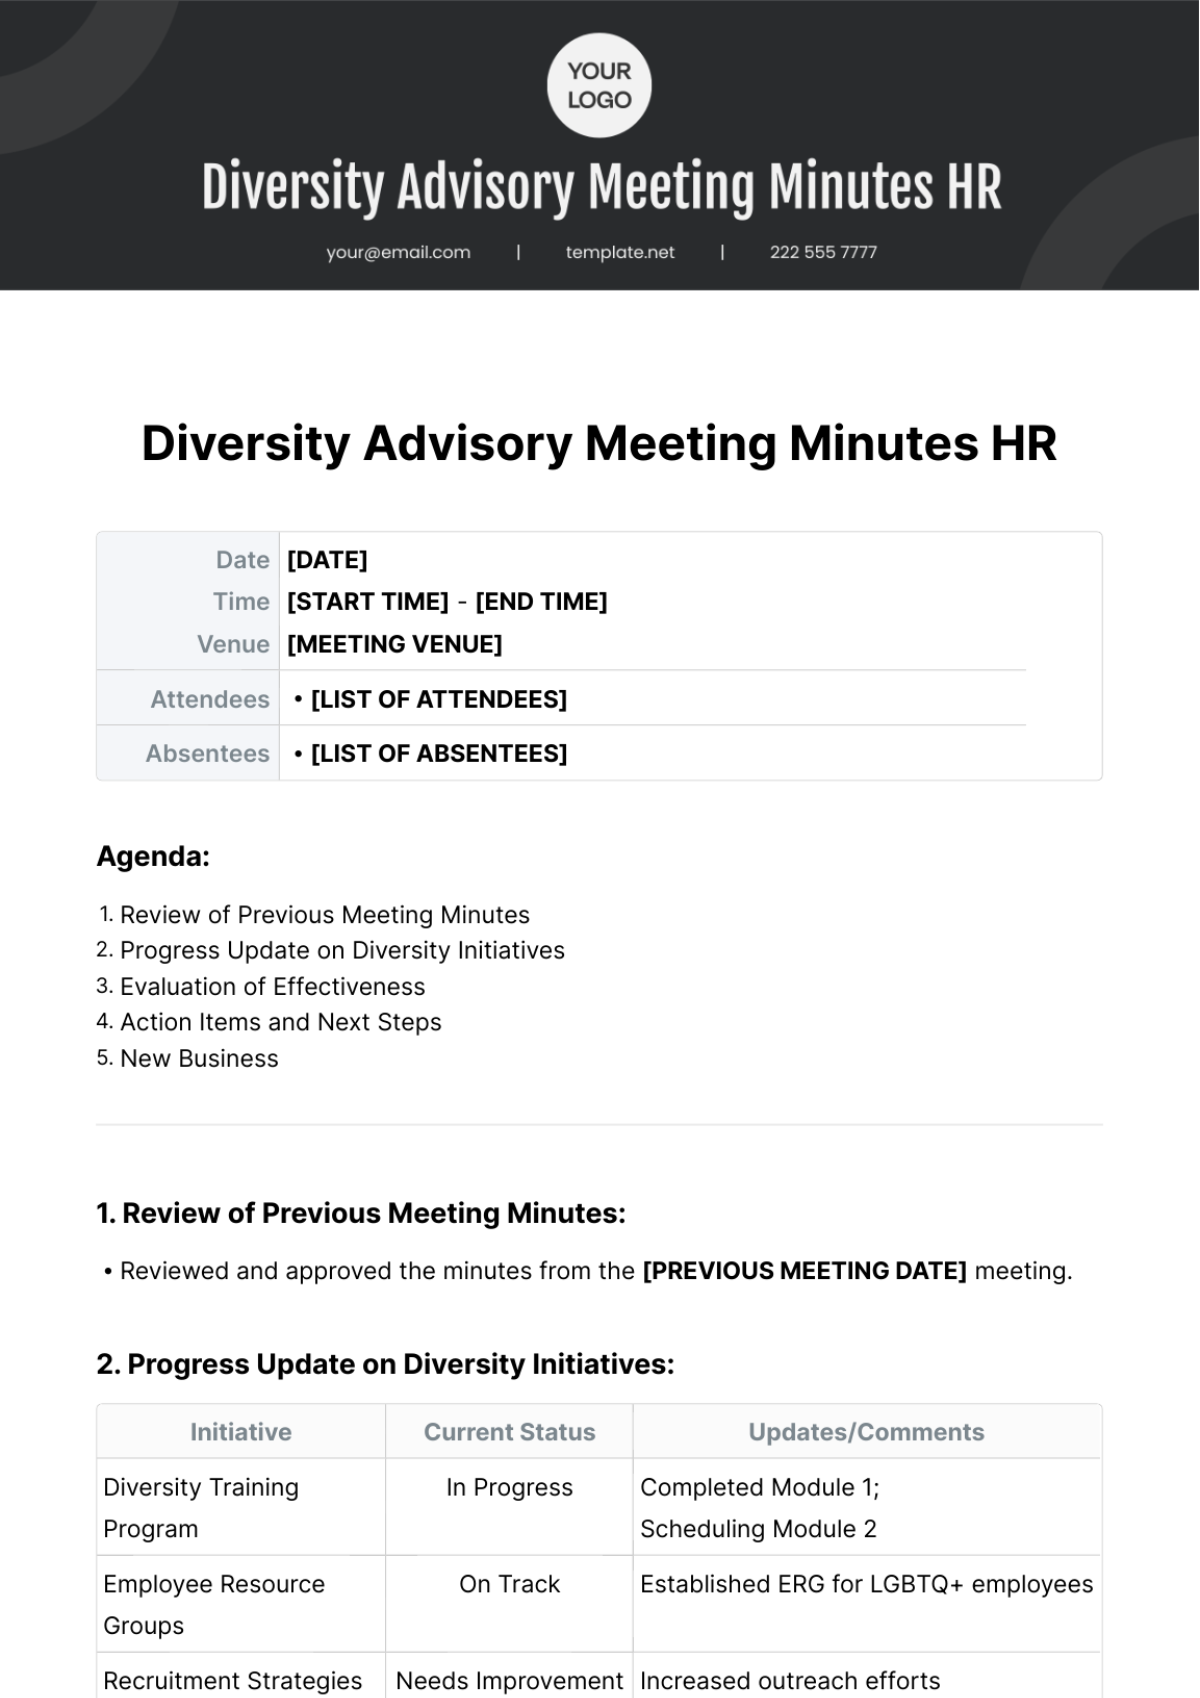 Diversity Advisory Meeting Minutes HR Template